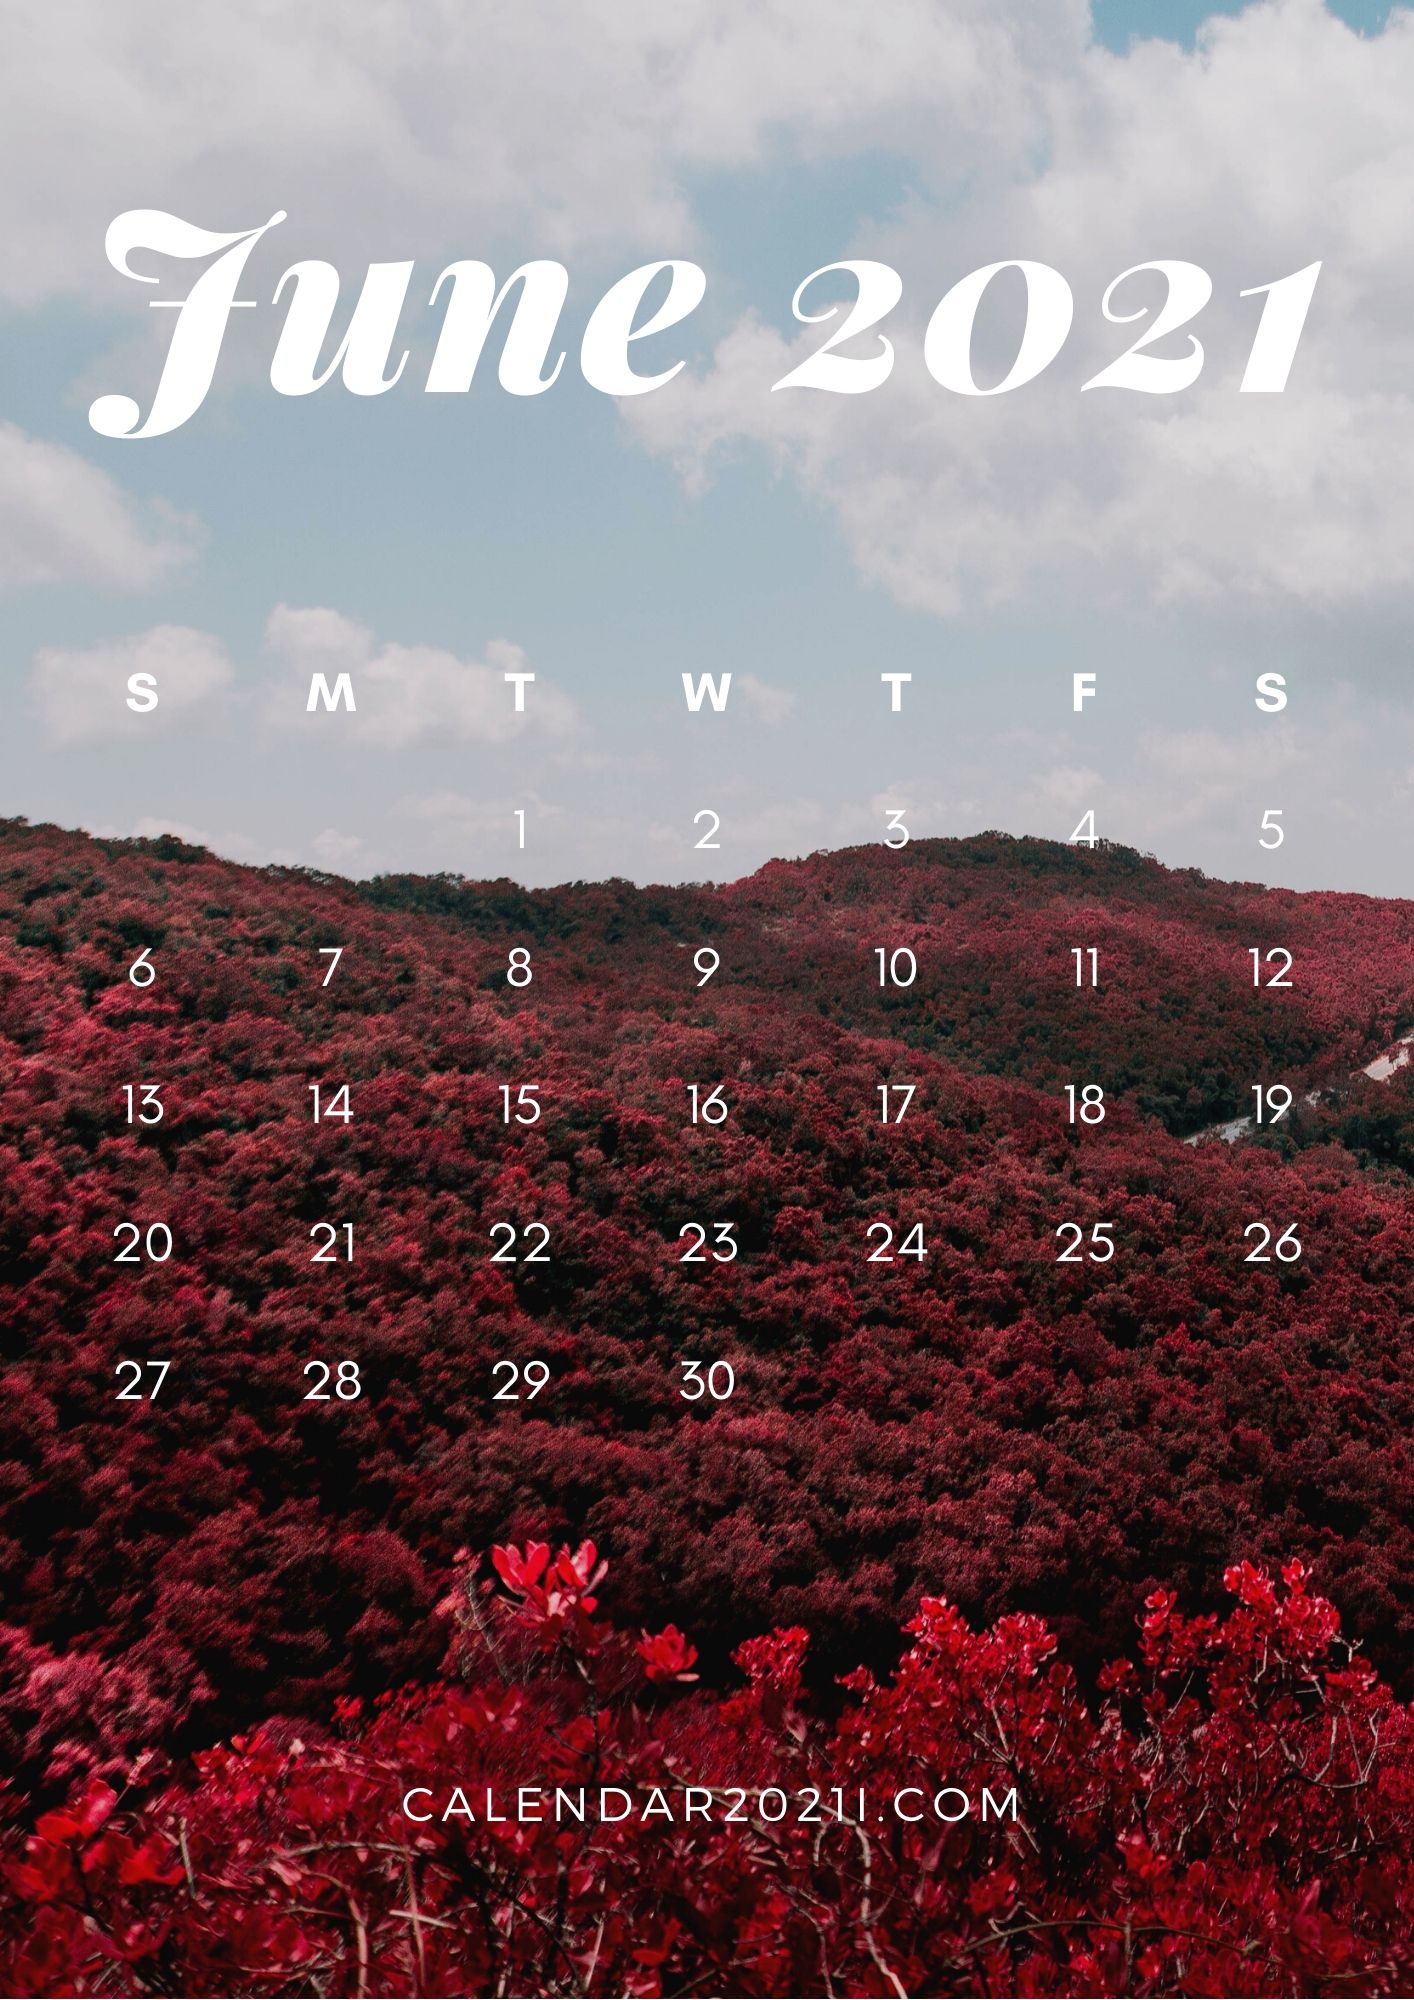 June 2021 iPhone Calendar Wallpaper